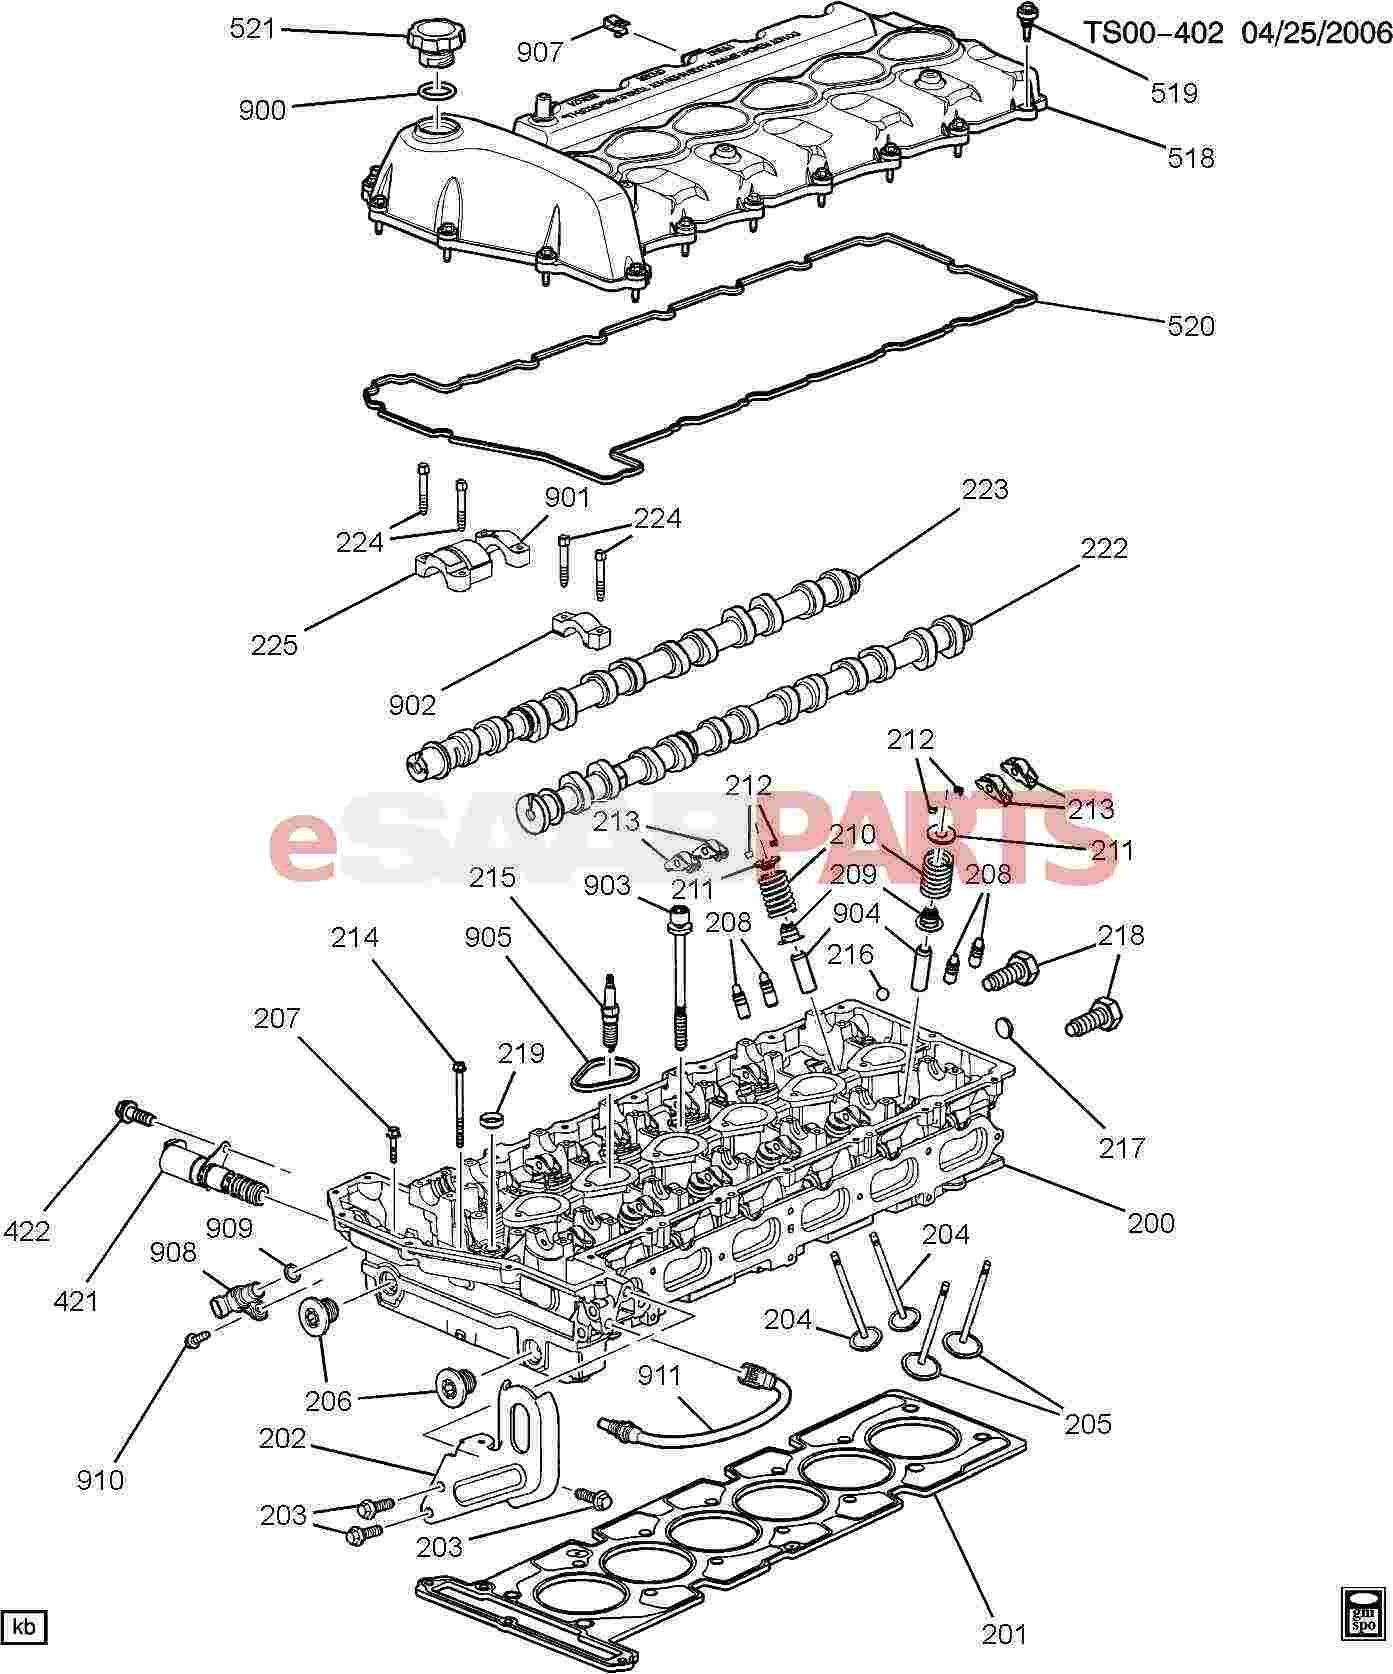 Chevy Trailblazer Engine Diagram ] Saab Bolt Hfh M6x1x20 17 9 Thd 14 2 O D 9 8 Tin Zn Of Chevy Trailblazer Engine Diagram